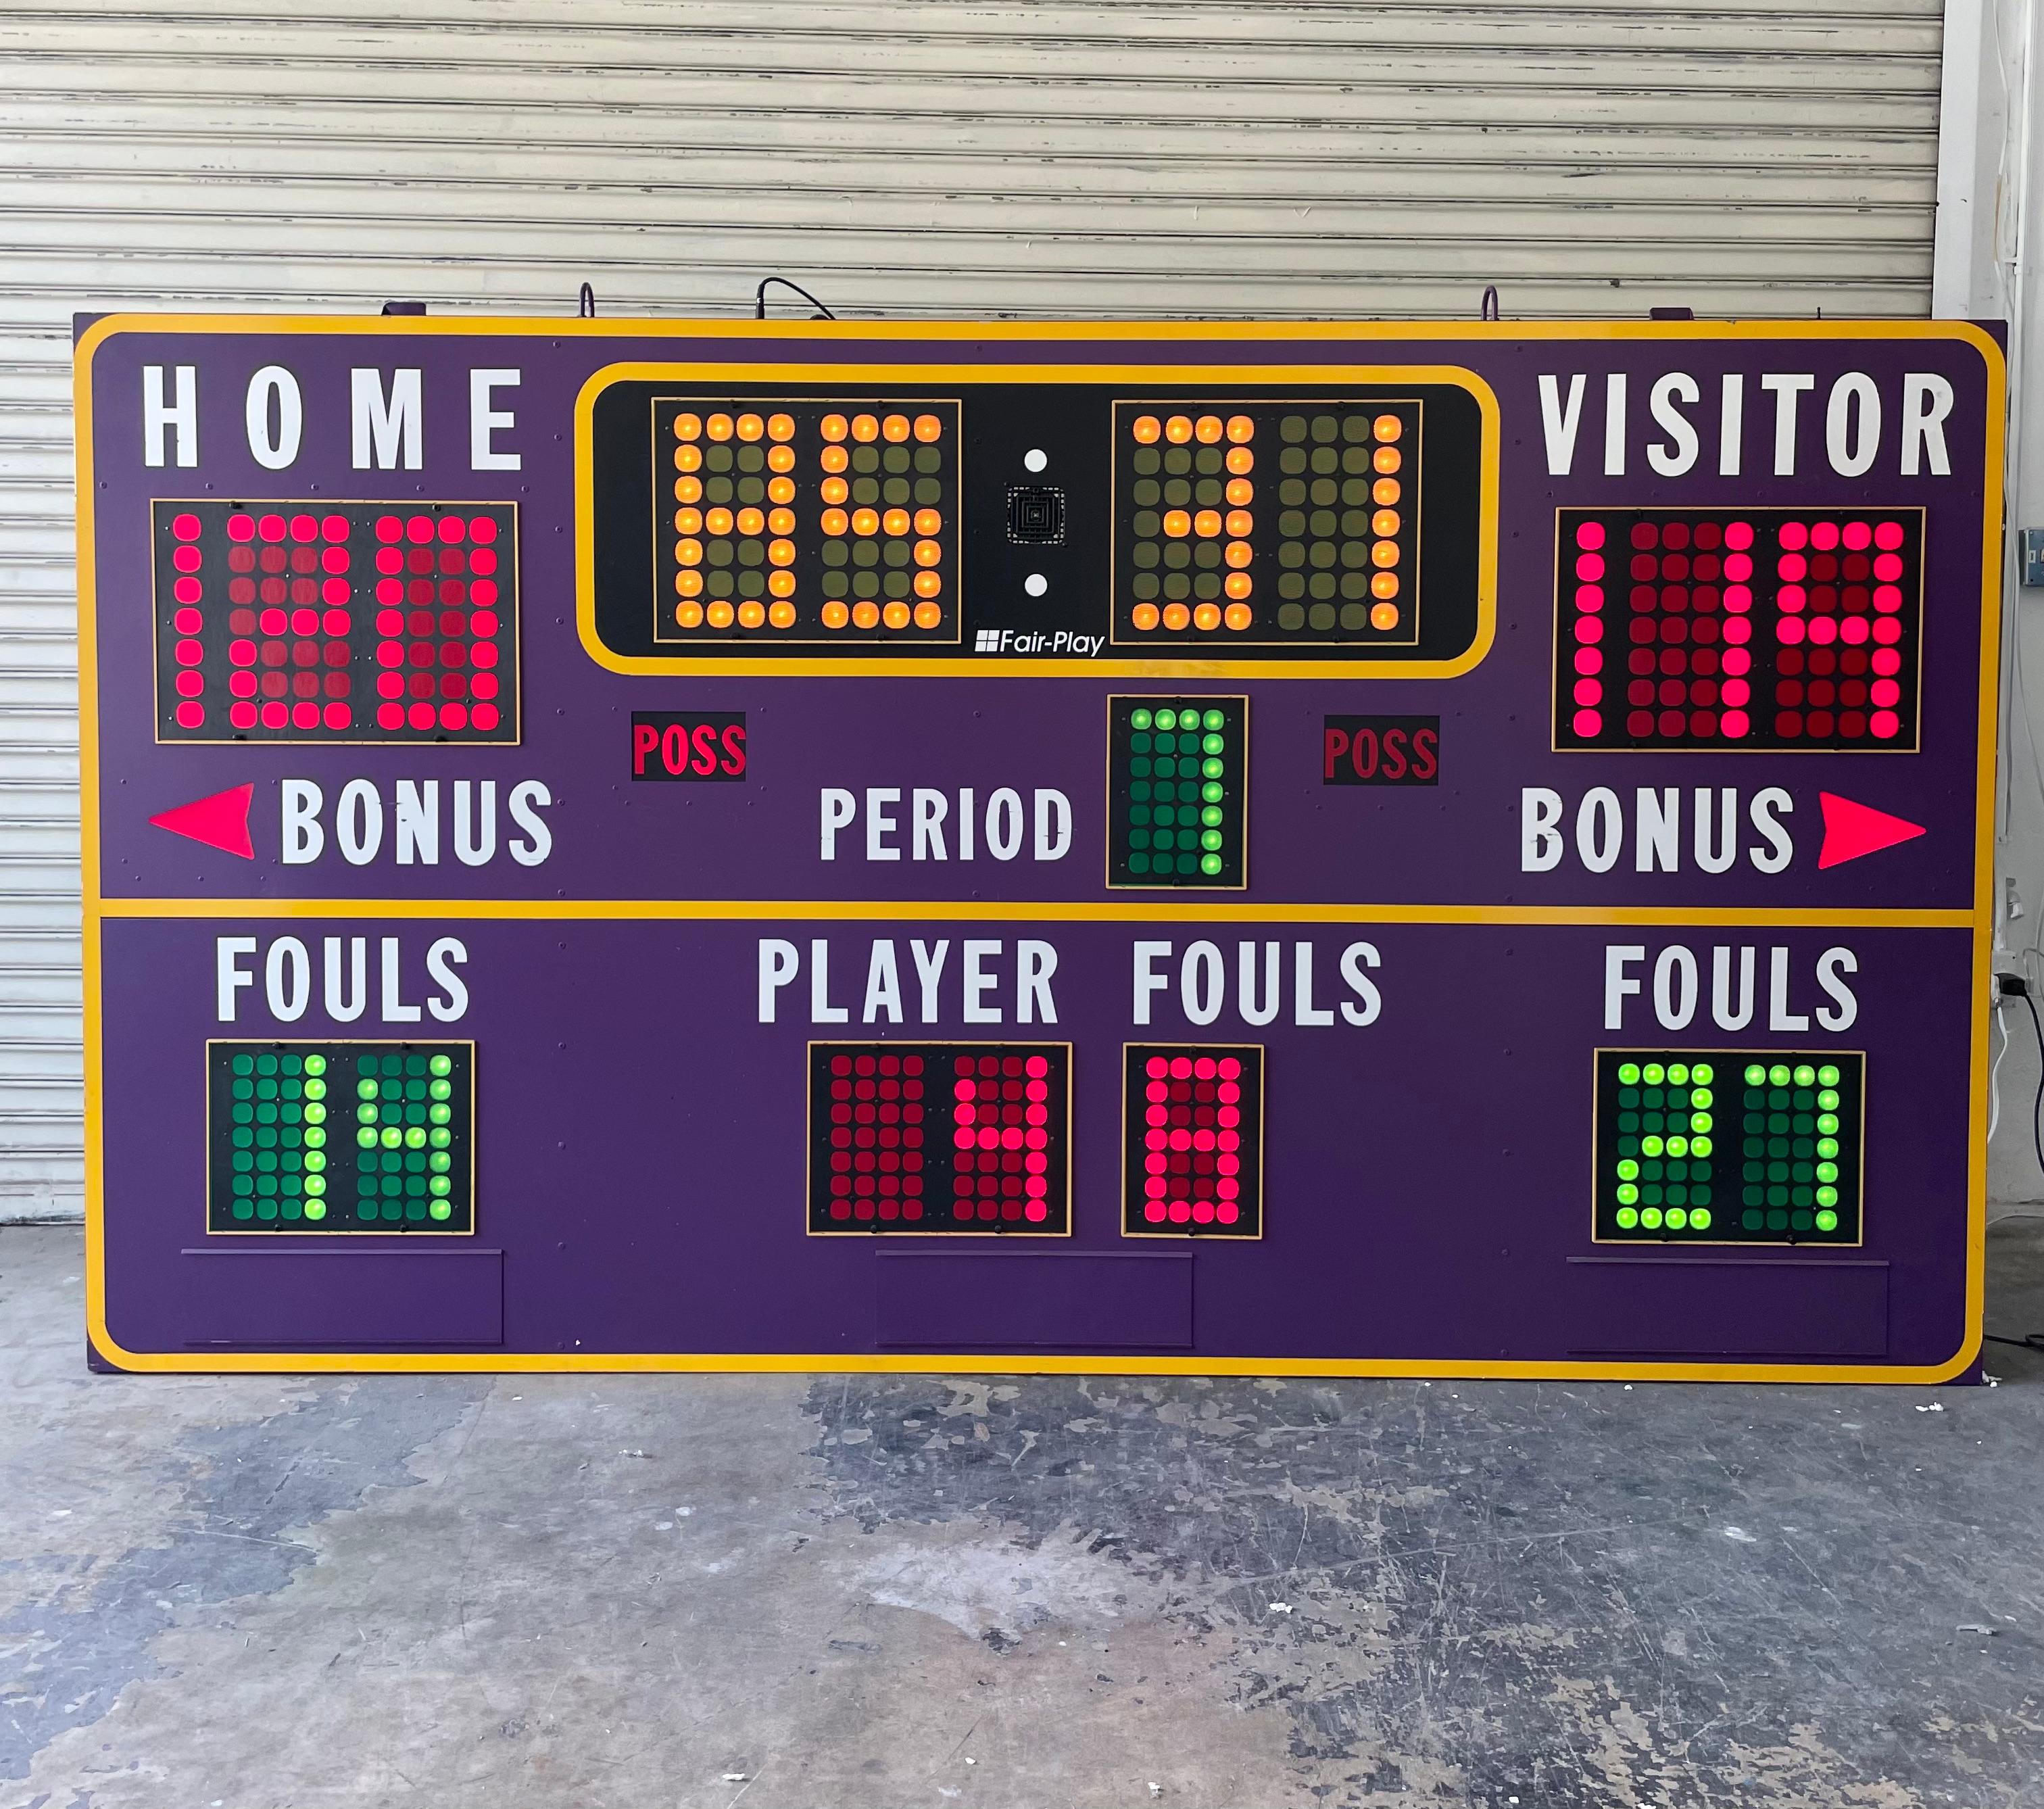 Lakers Practice Facility Basketball Scoreboard 5